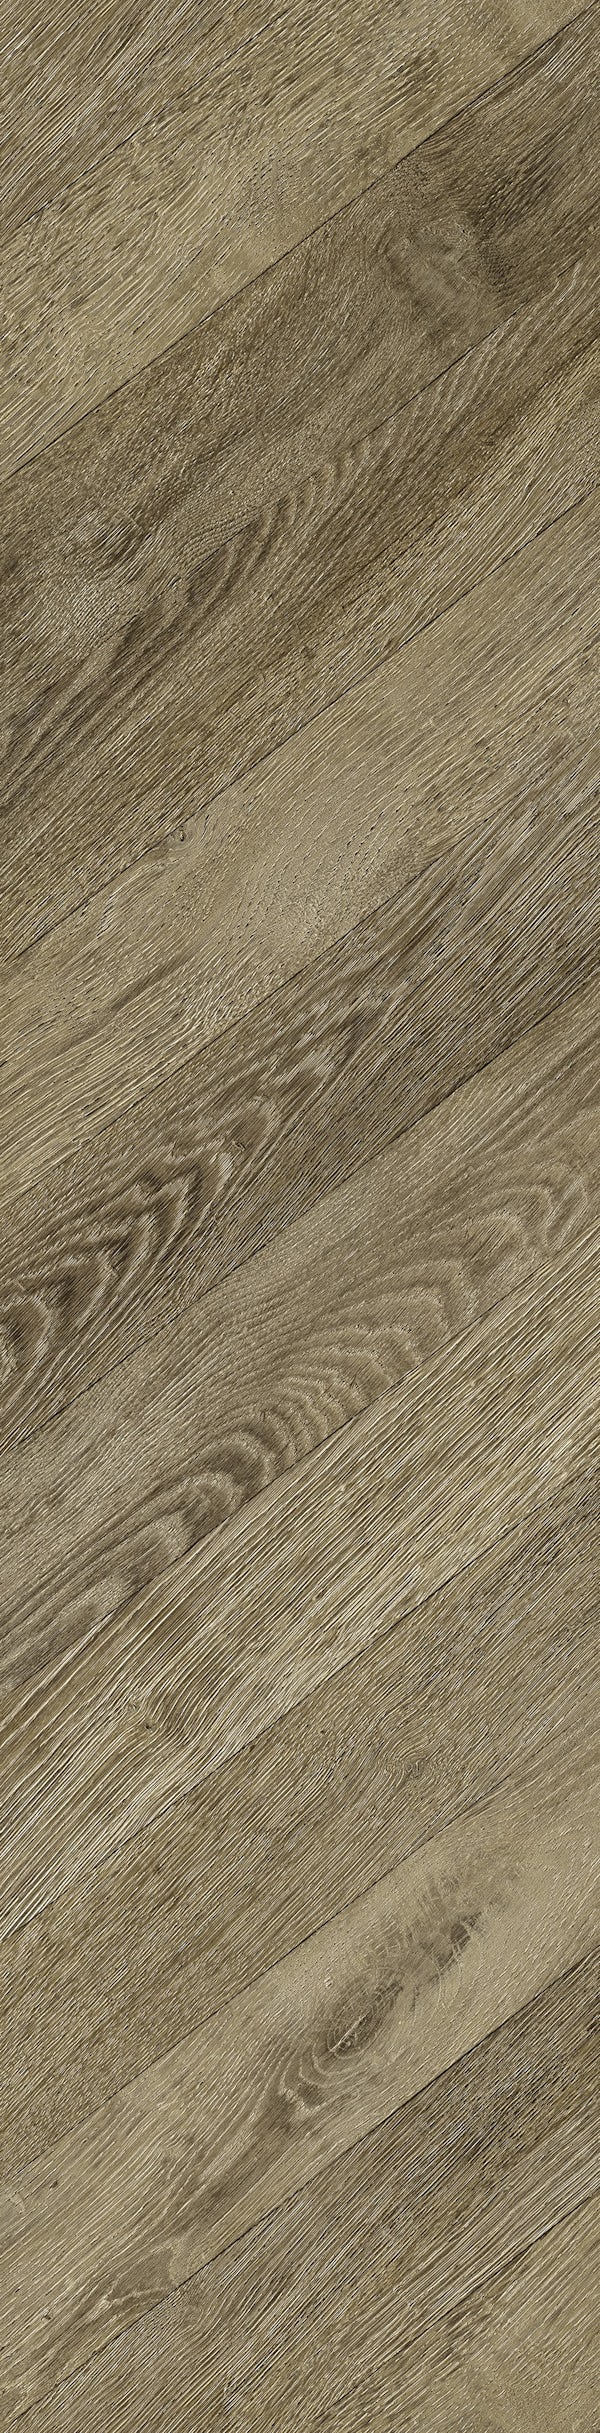 Calcolo Melville caramel oak chevron water resistant laminate flooring 8mm